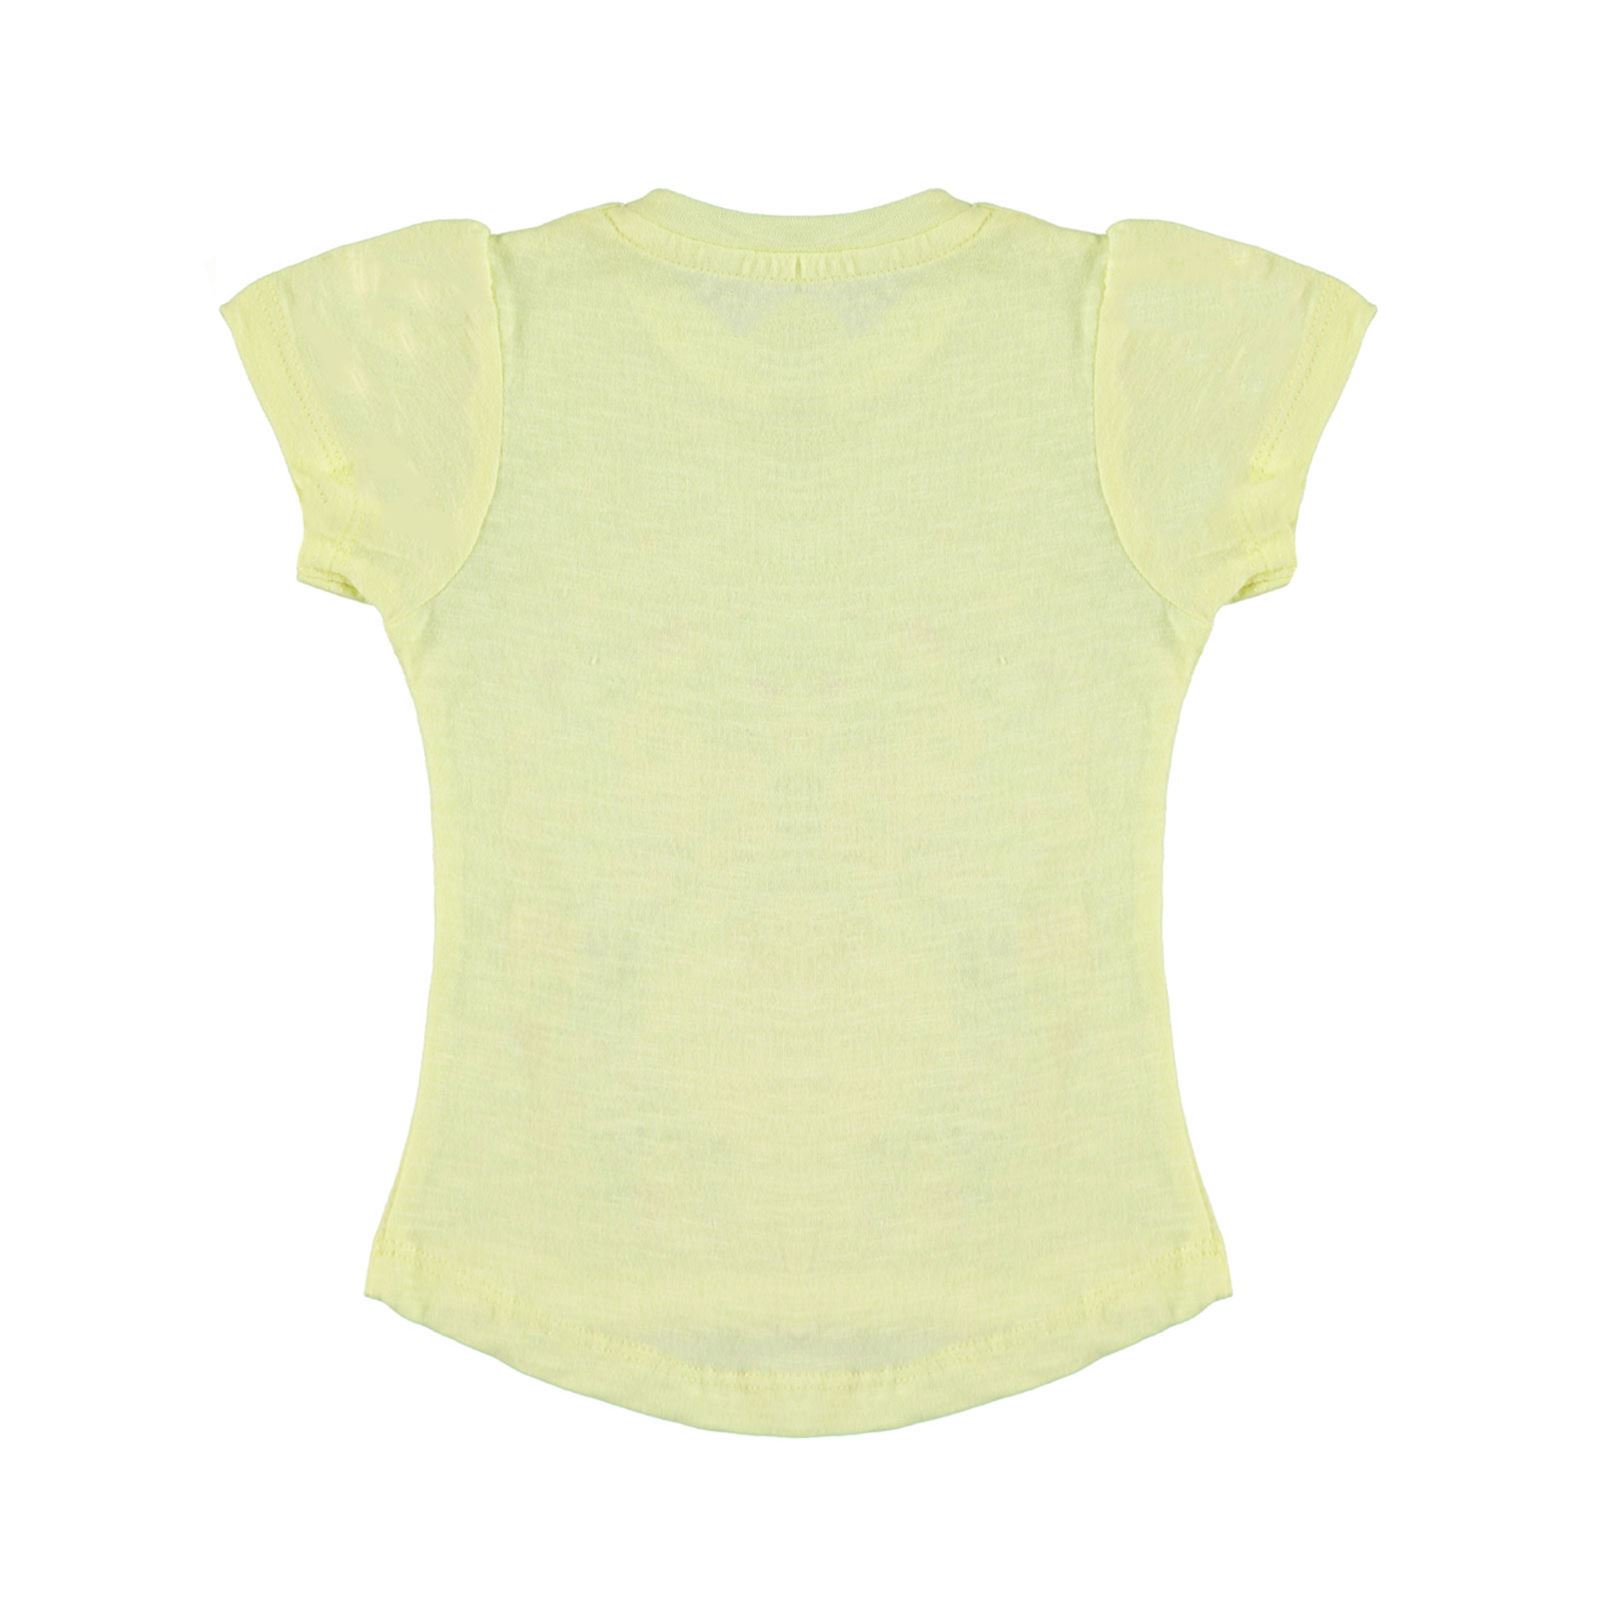 Kujju Kız Bebek Tişört 6-18 Ay Sarı